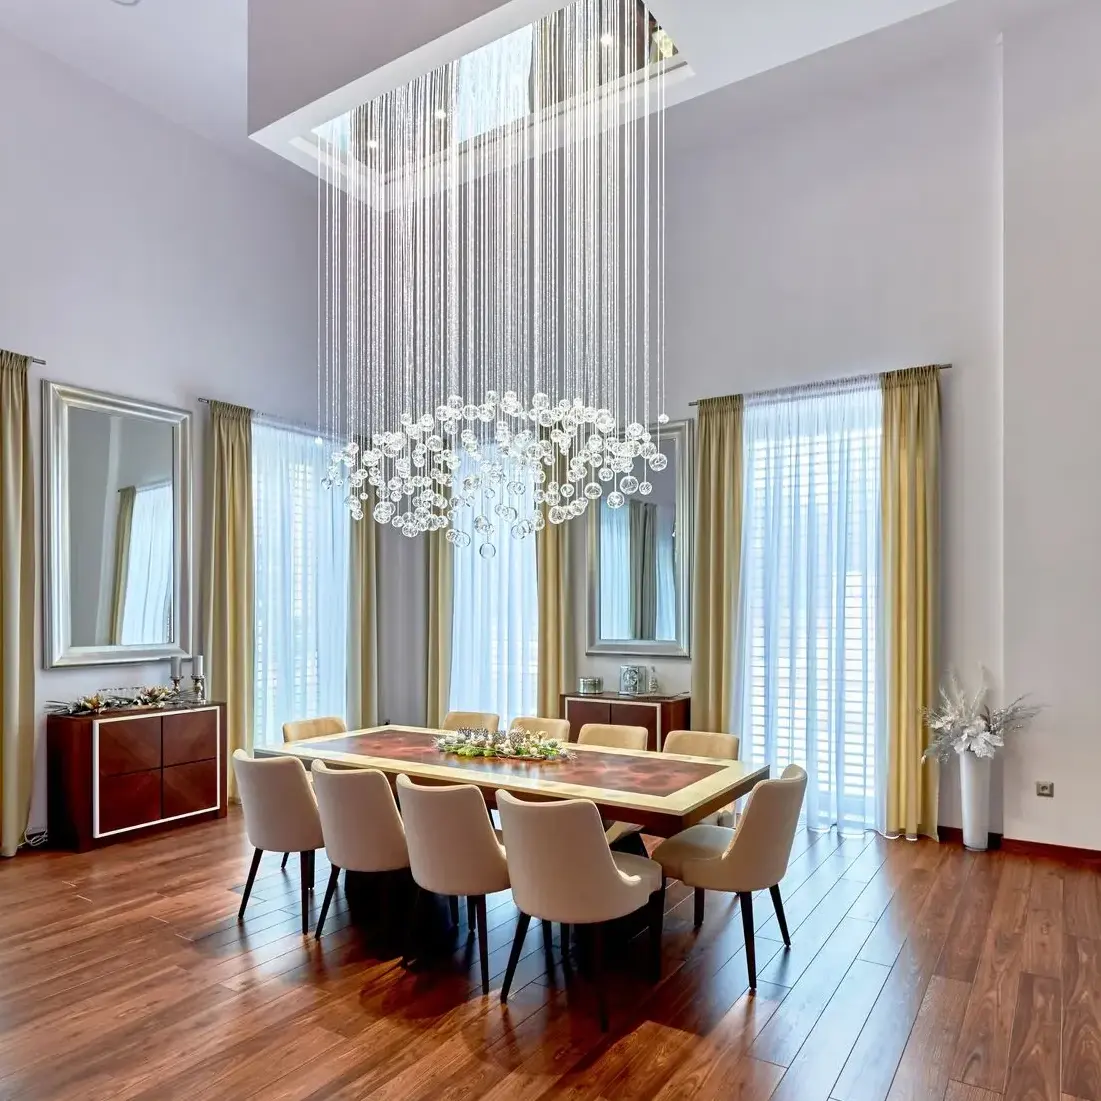 Luxury private house modern interior lighting